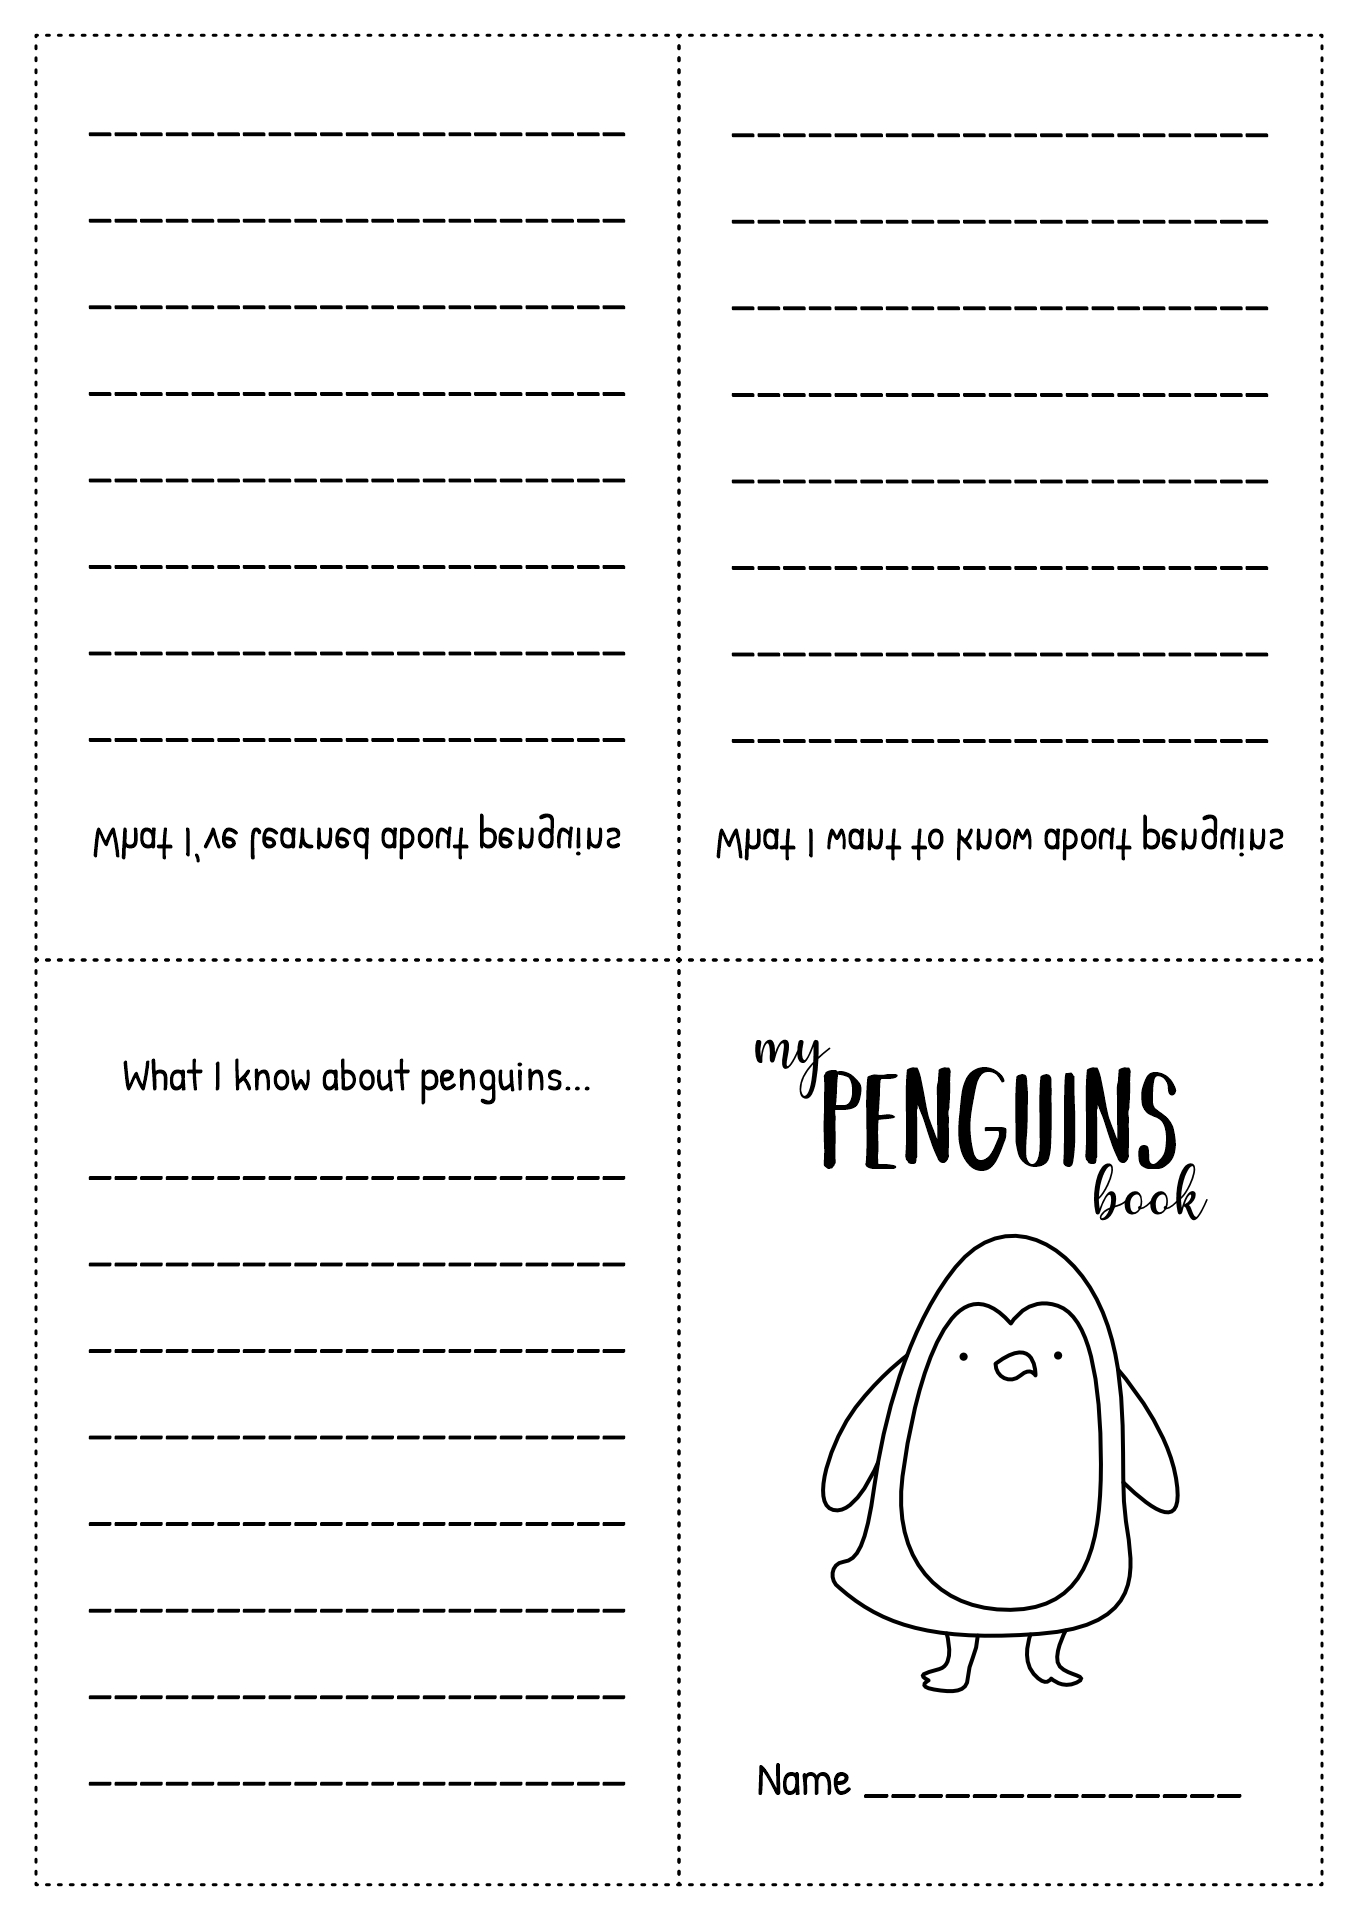 10 Best Images of Penguin Preschool Worksheets - Penguin Parts, Penguin